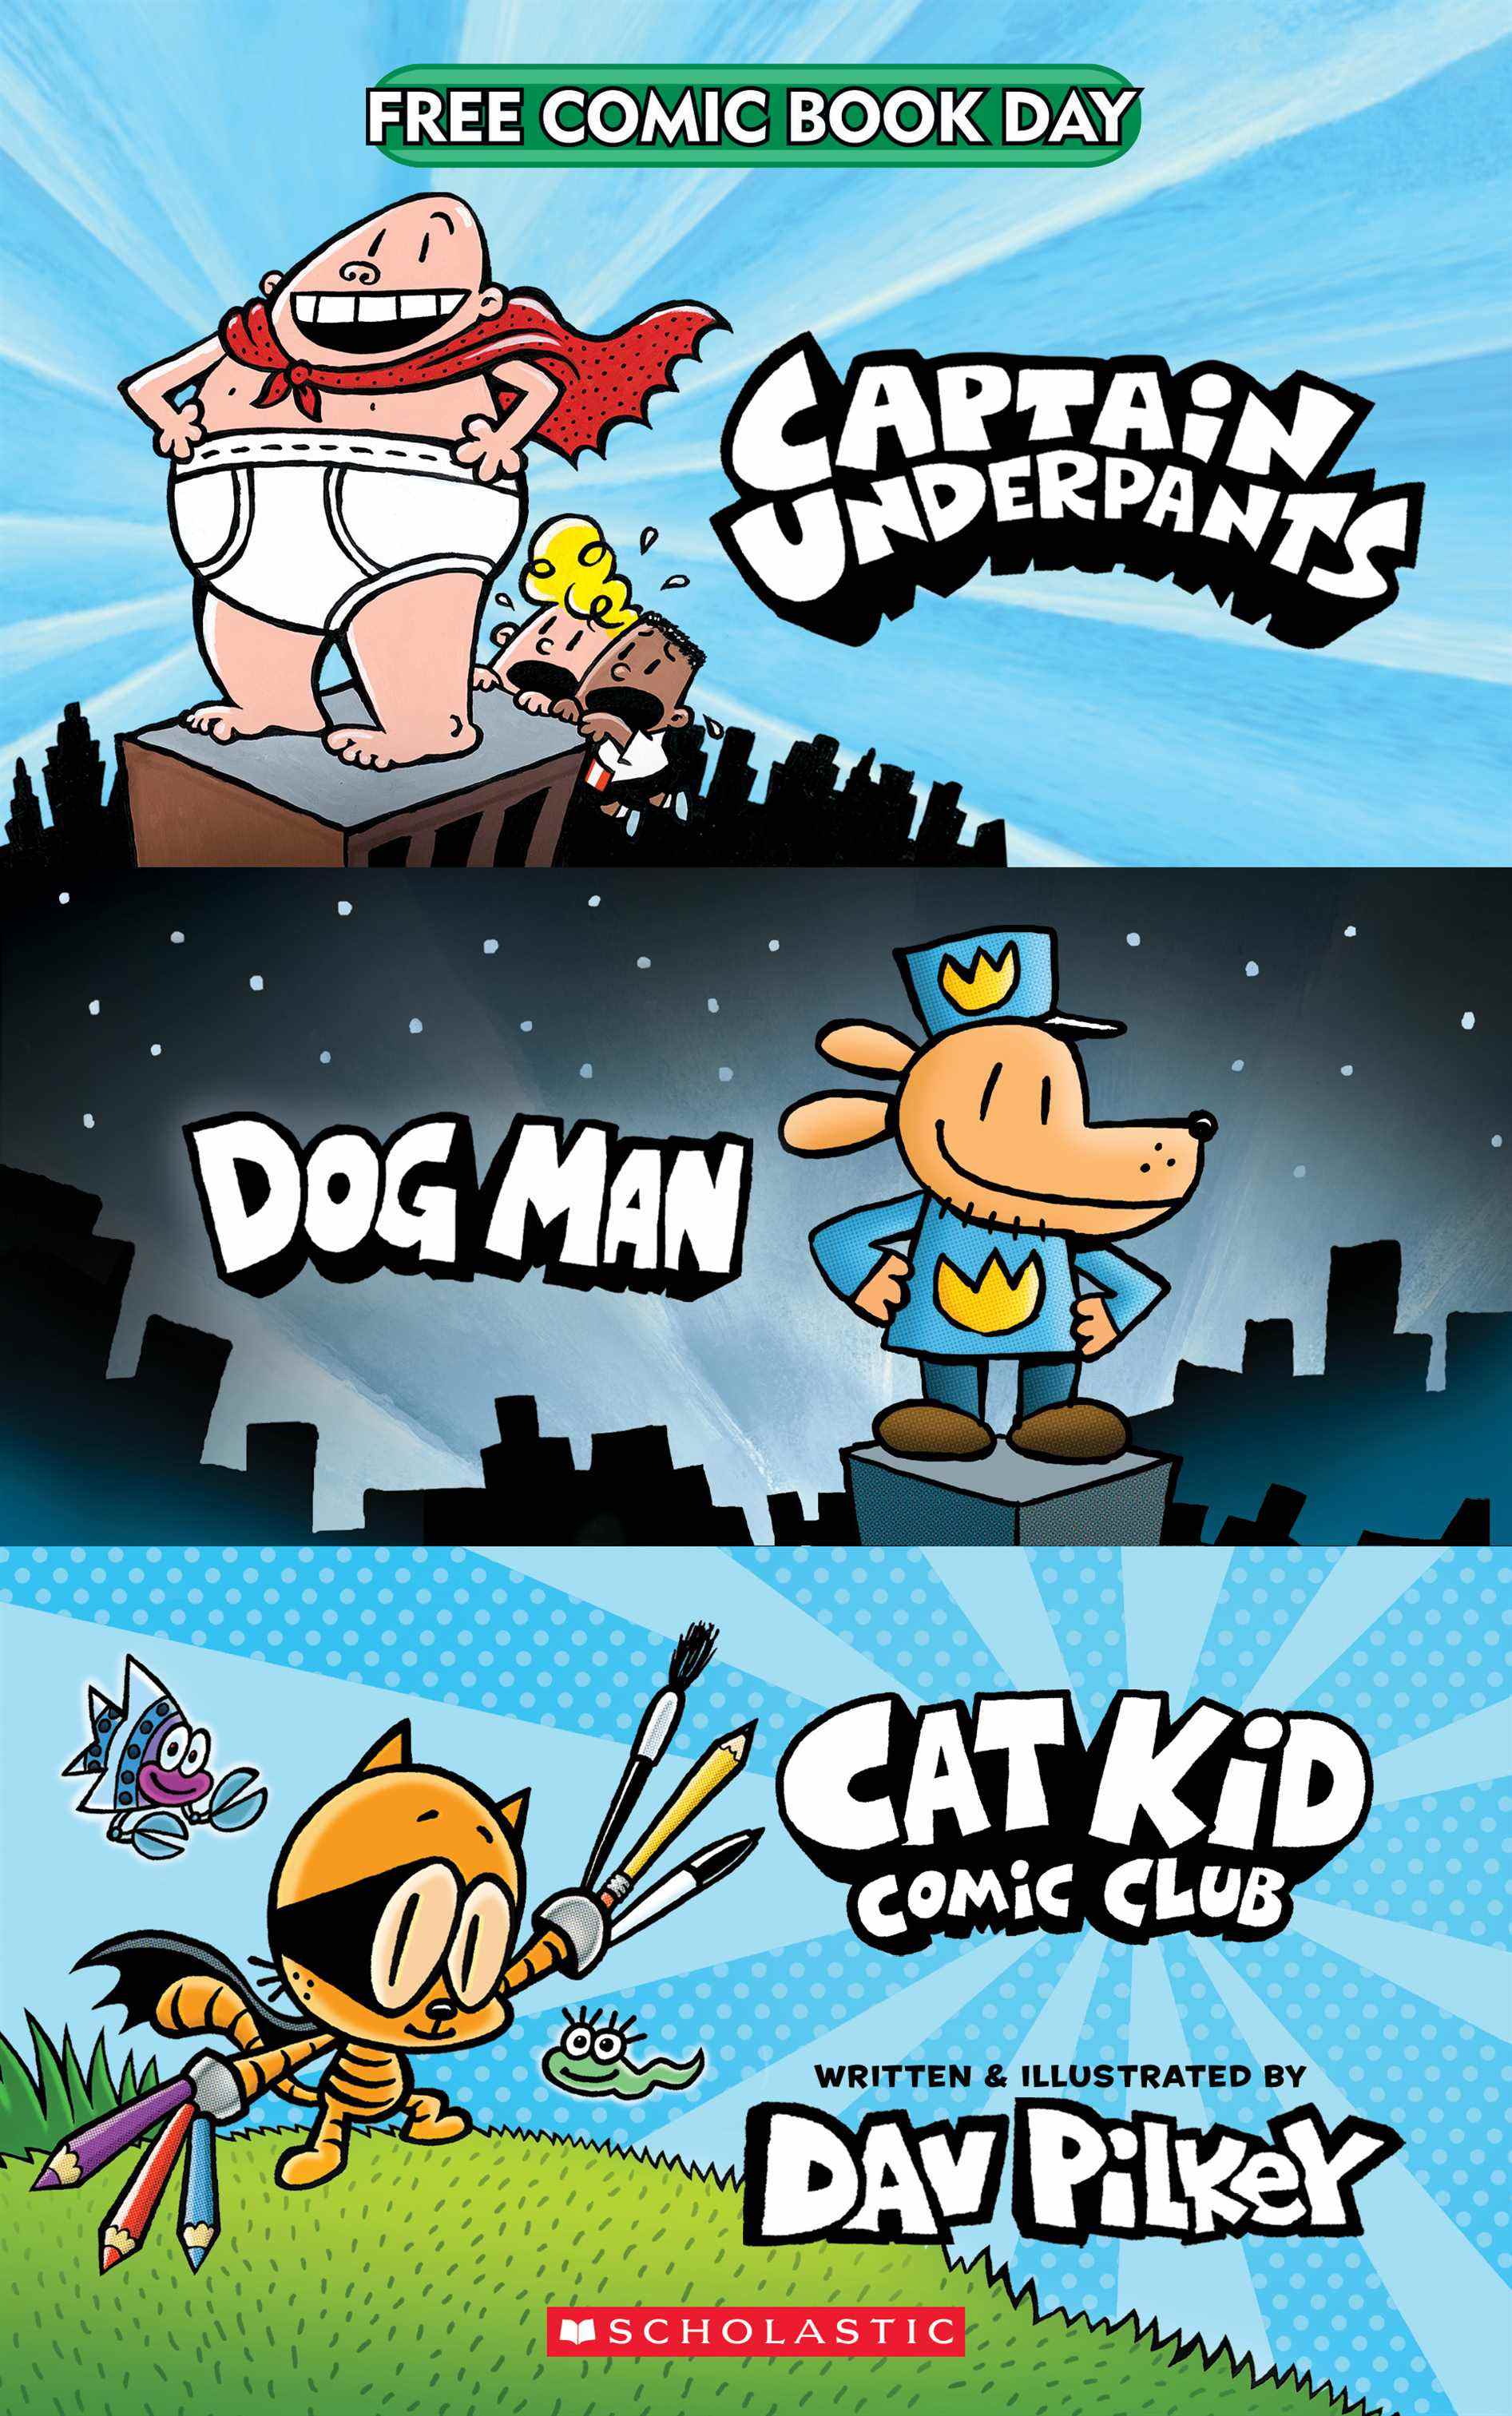 Couverture du teaser Super Comic de Dav Pilkey's Dog Man & Friends